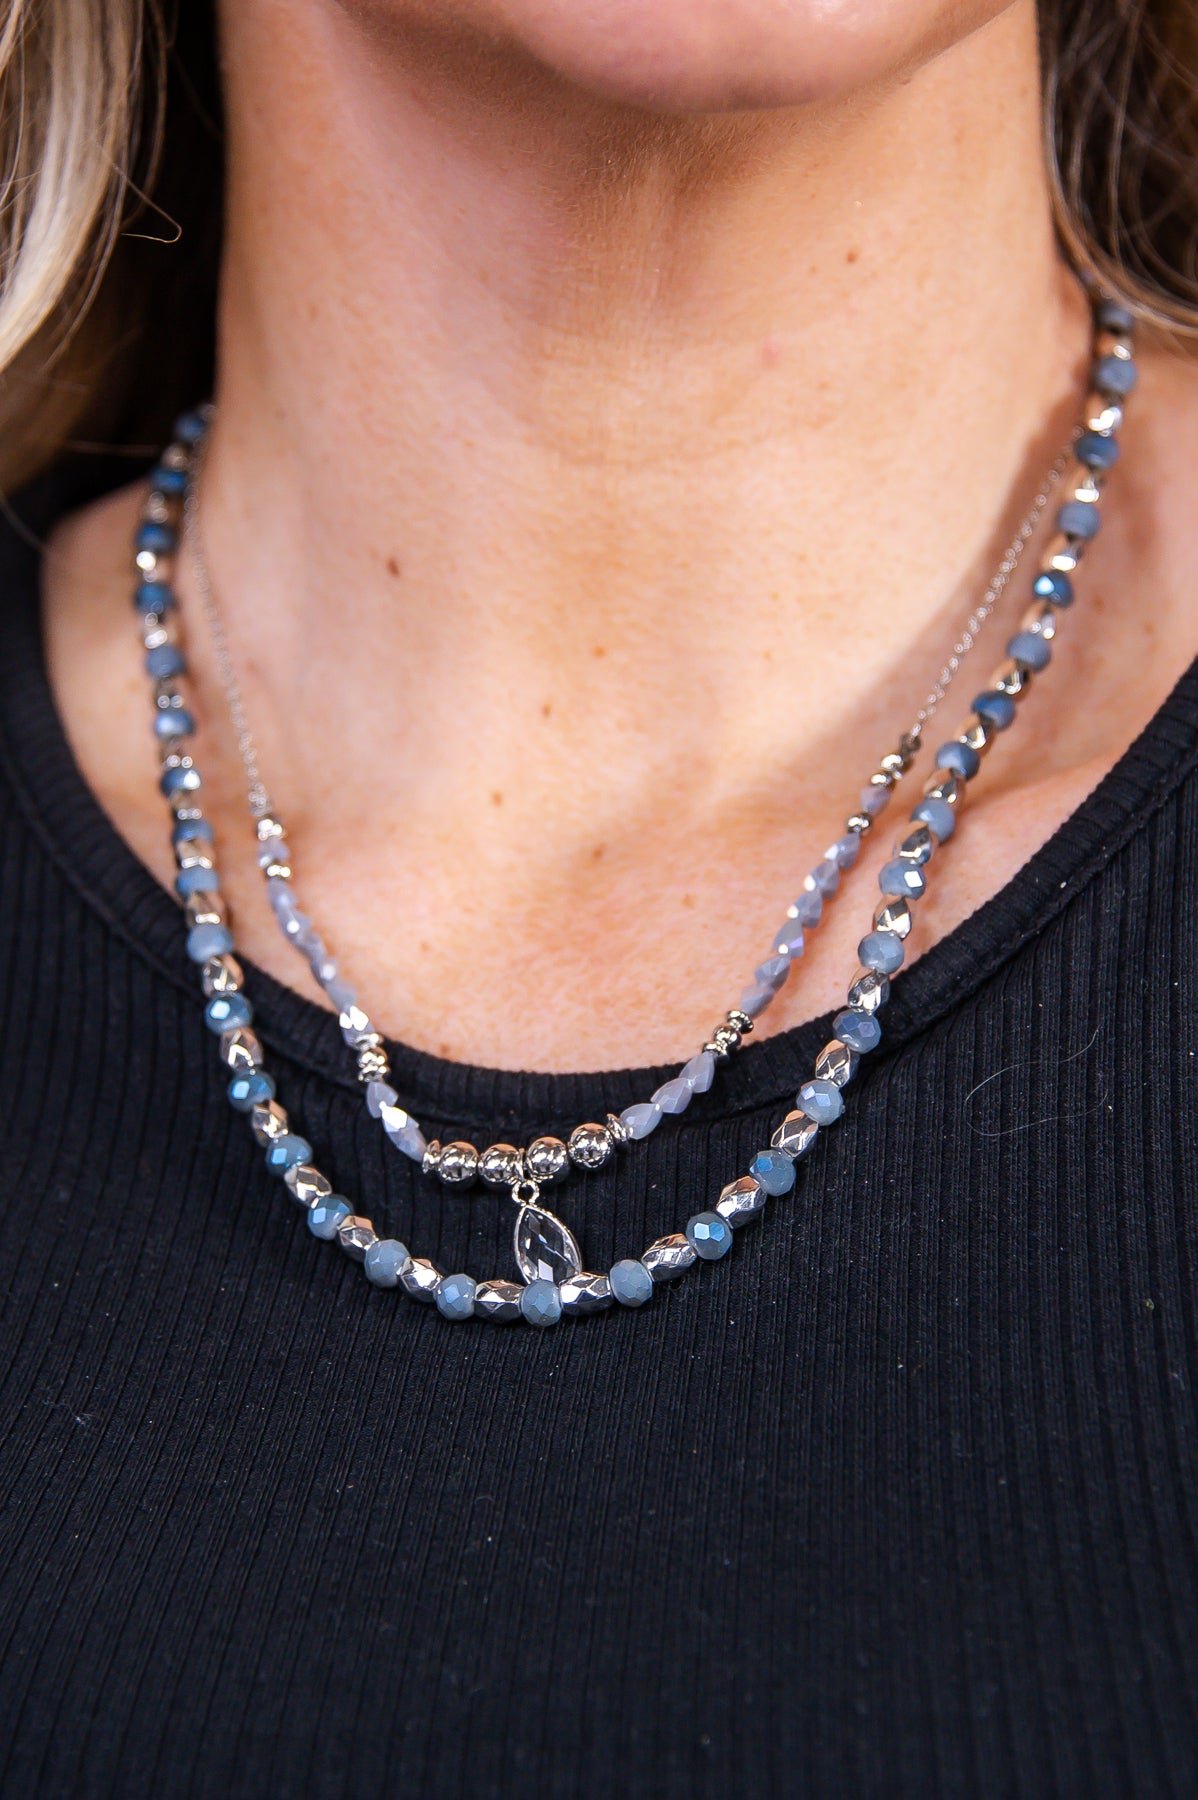 Steel Blue/Silver Seed Bead Layered Pendant Necklace - NEK4281SBL